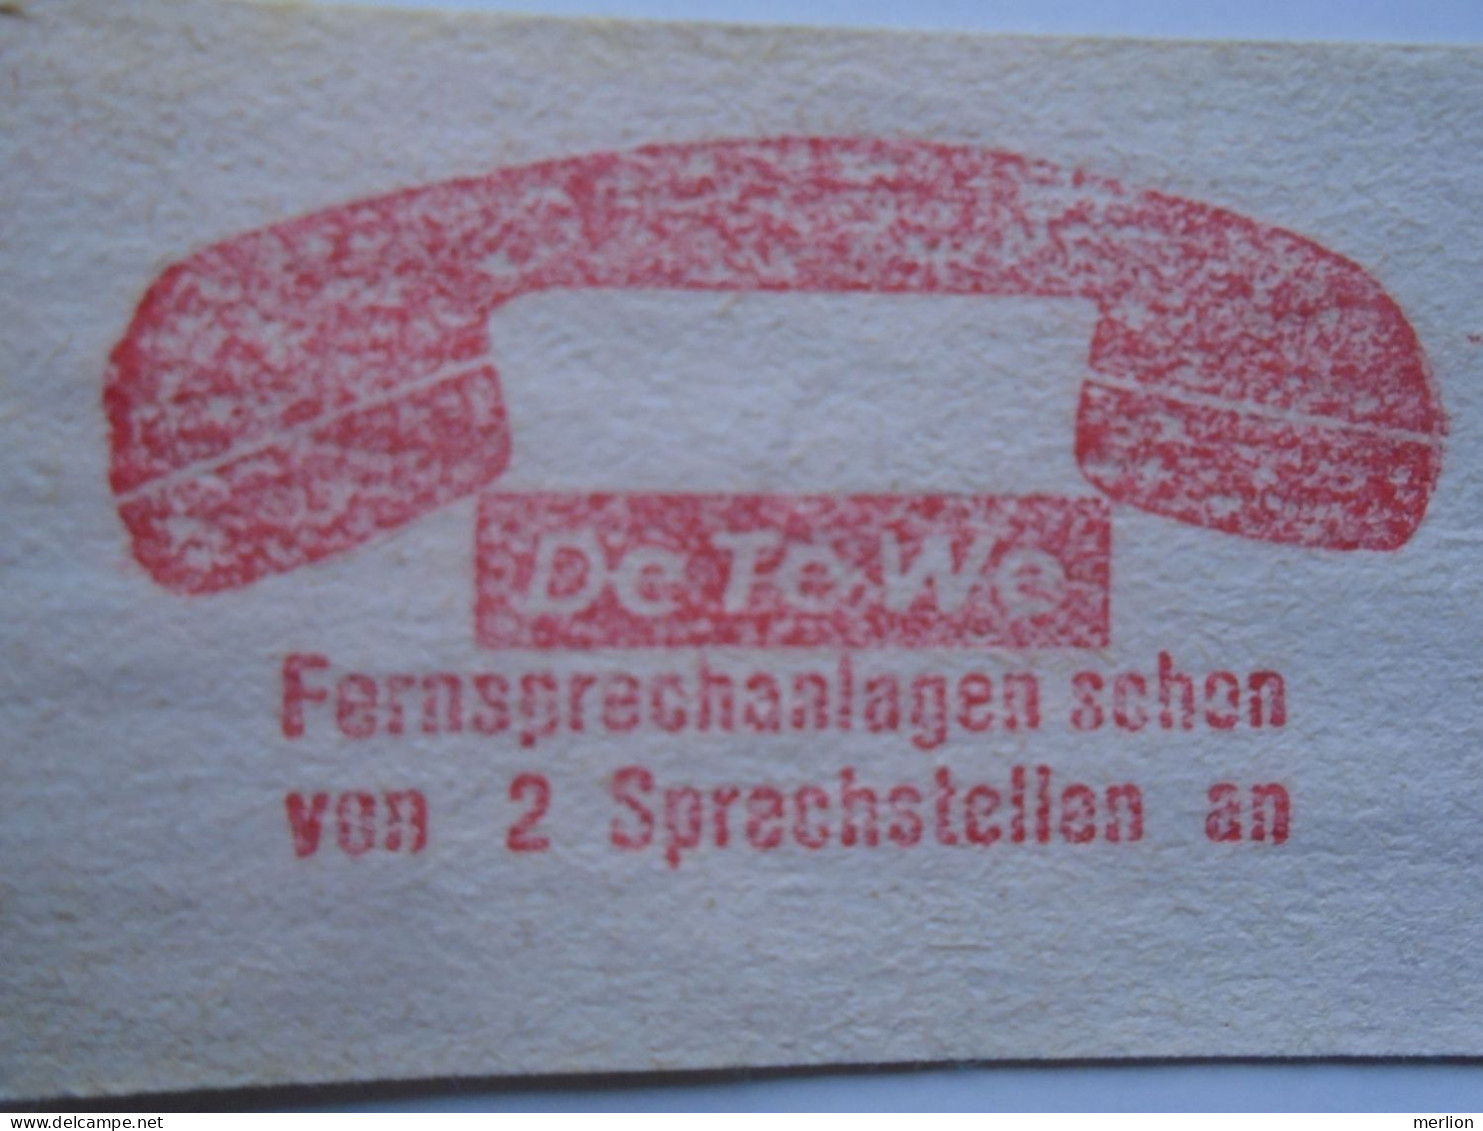 D200305  Red Meter Stamp - EMA - Freistempel  -Germany Berlin -Electricity,  Electro -1967  DeTeWe  Phone Telephone - Electricidad